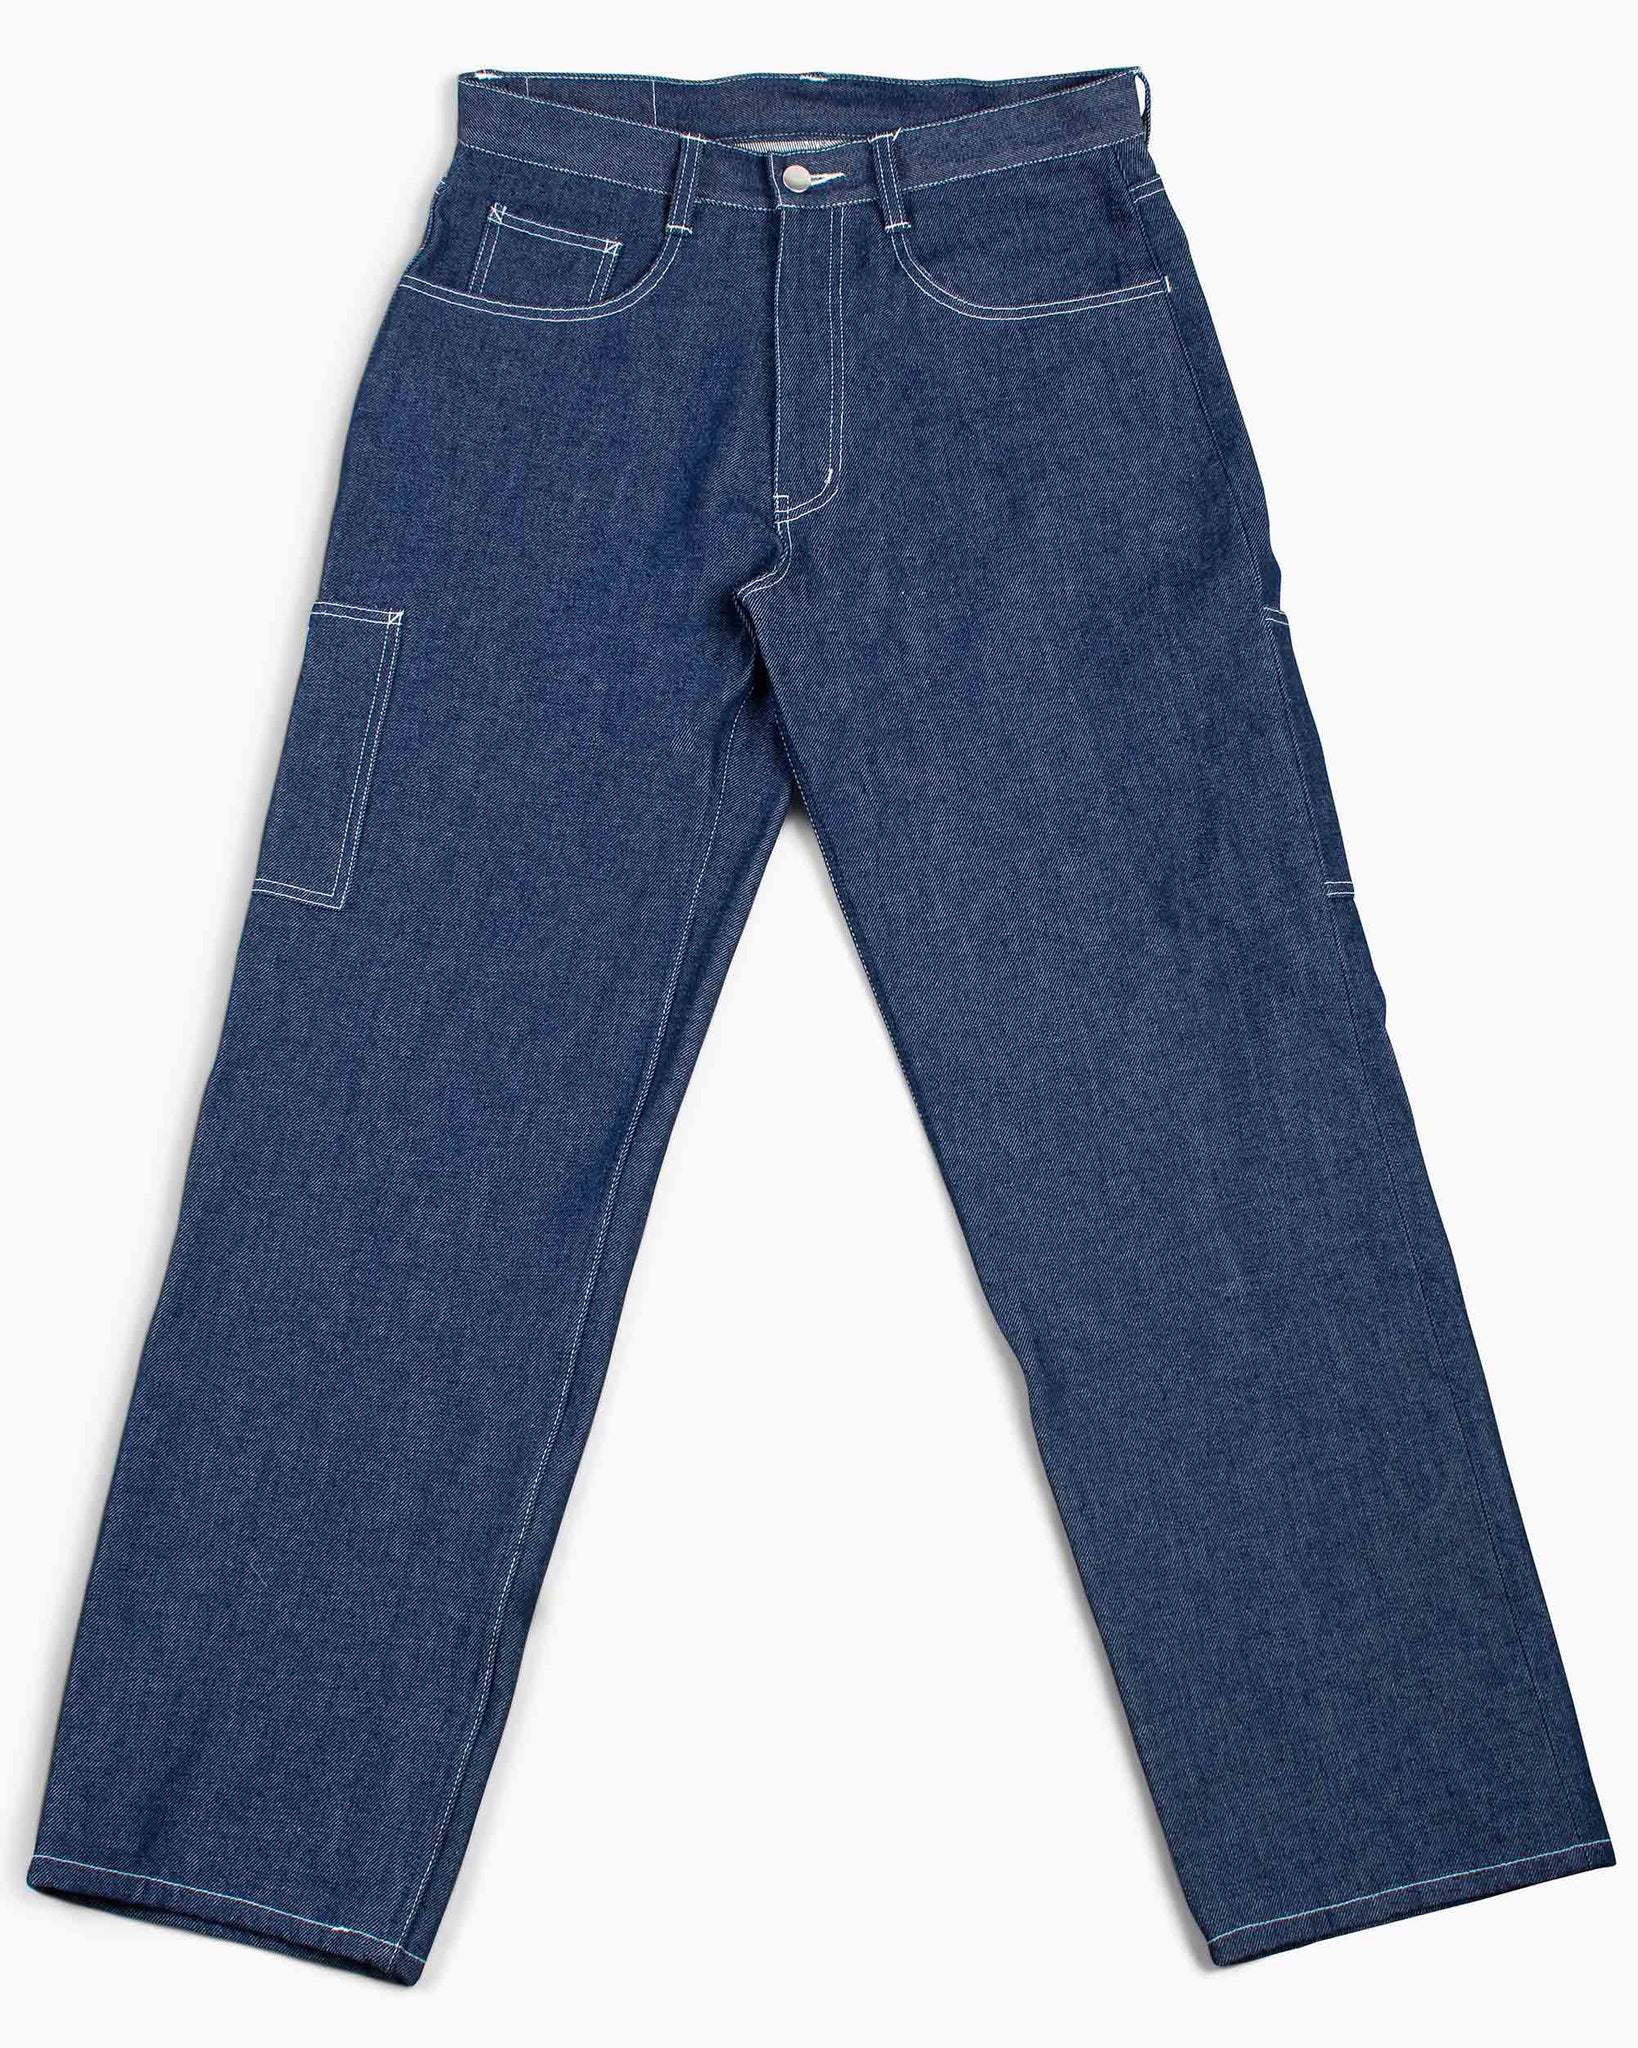 Randy's Garments 7-Pocket Jean Indigo Raw American Denim